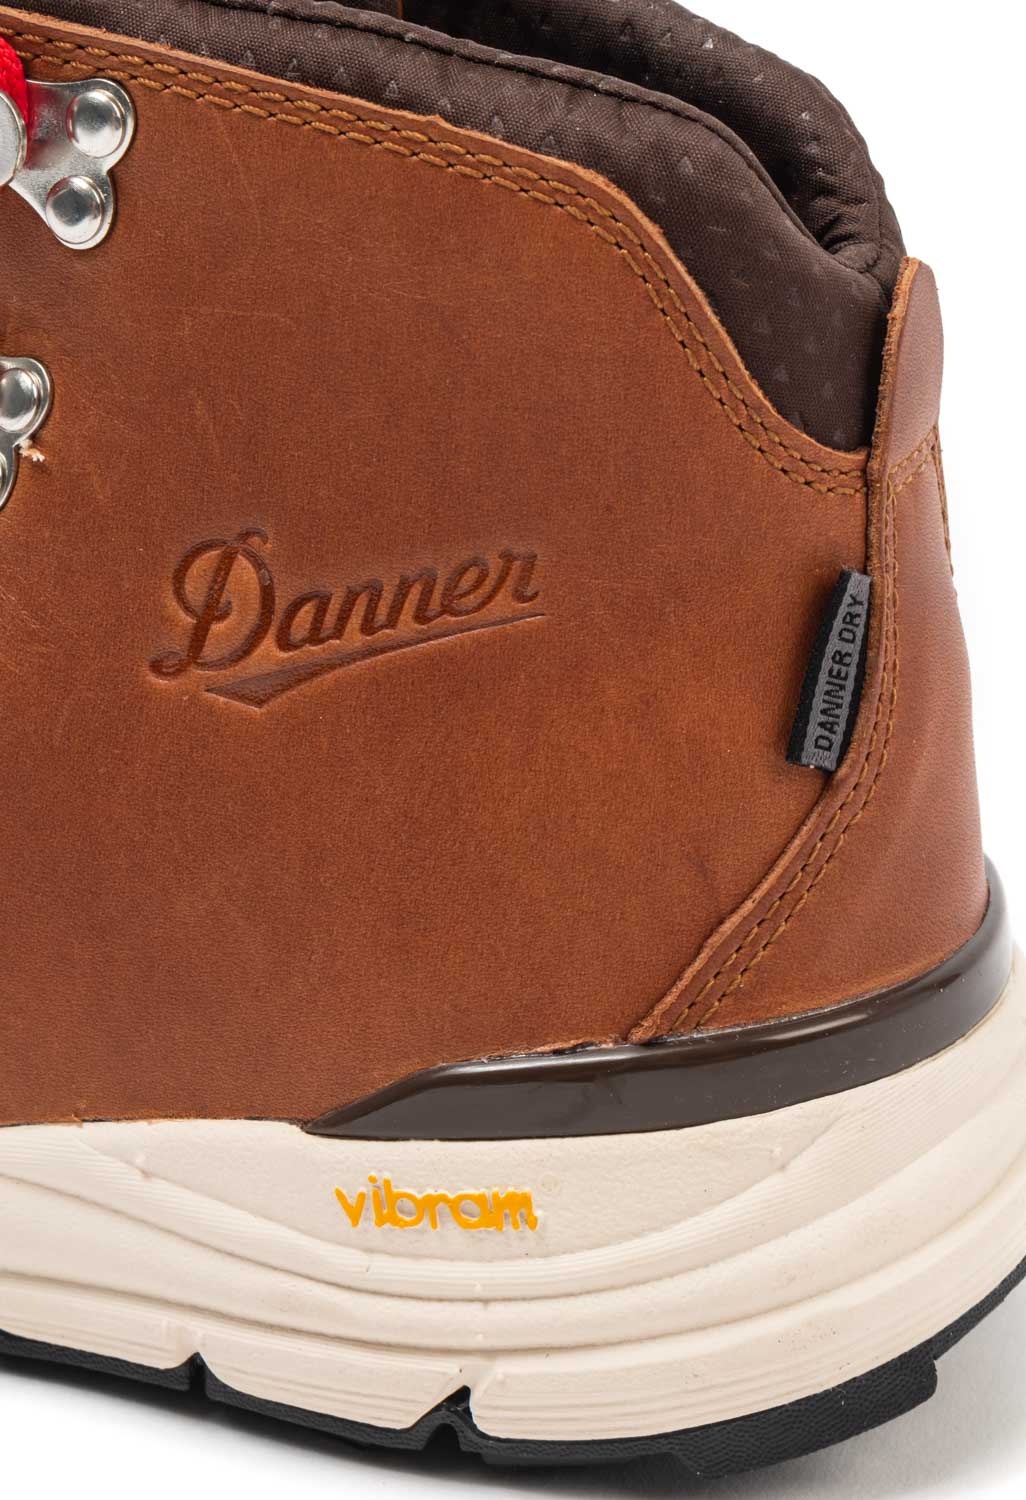 Danner Mountain 600 Full Grain Women's Boots - Saddle Tan